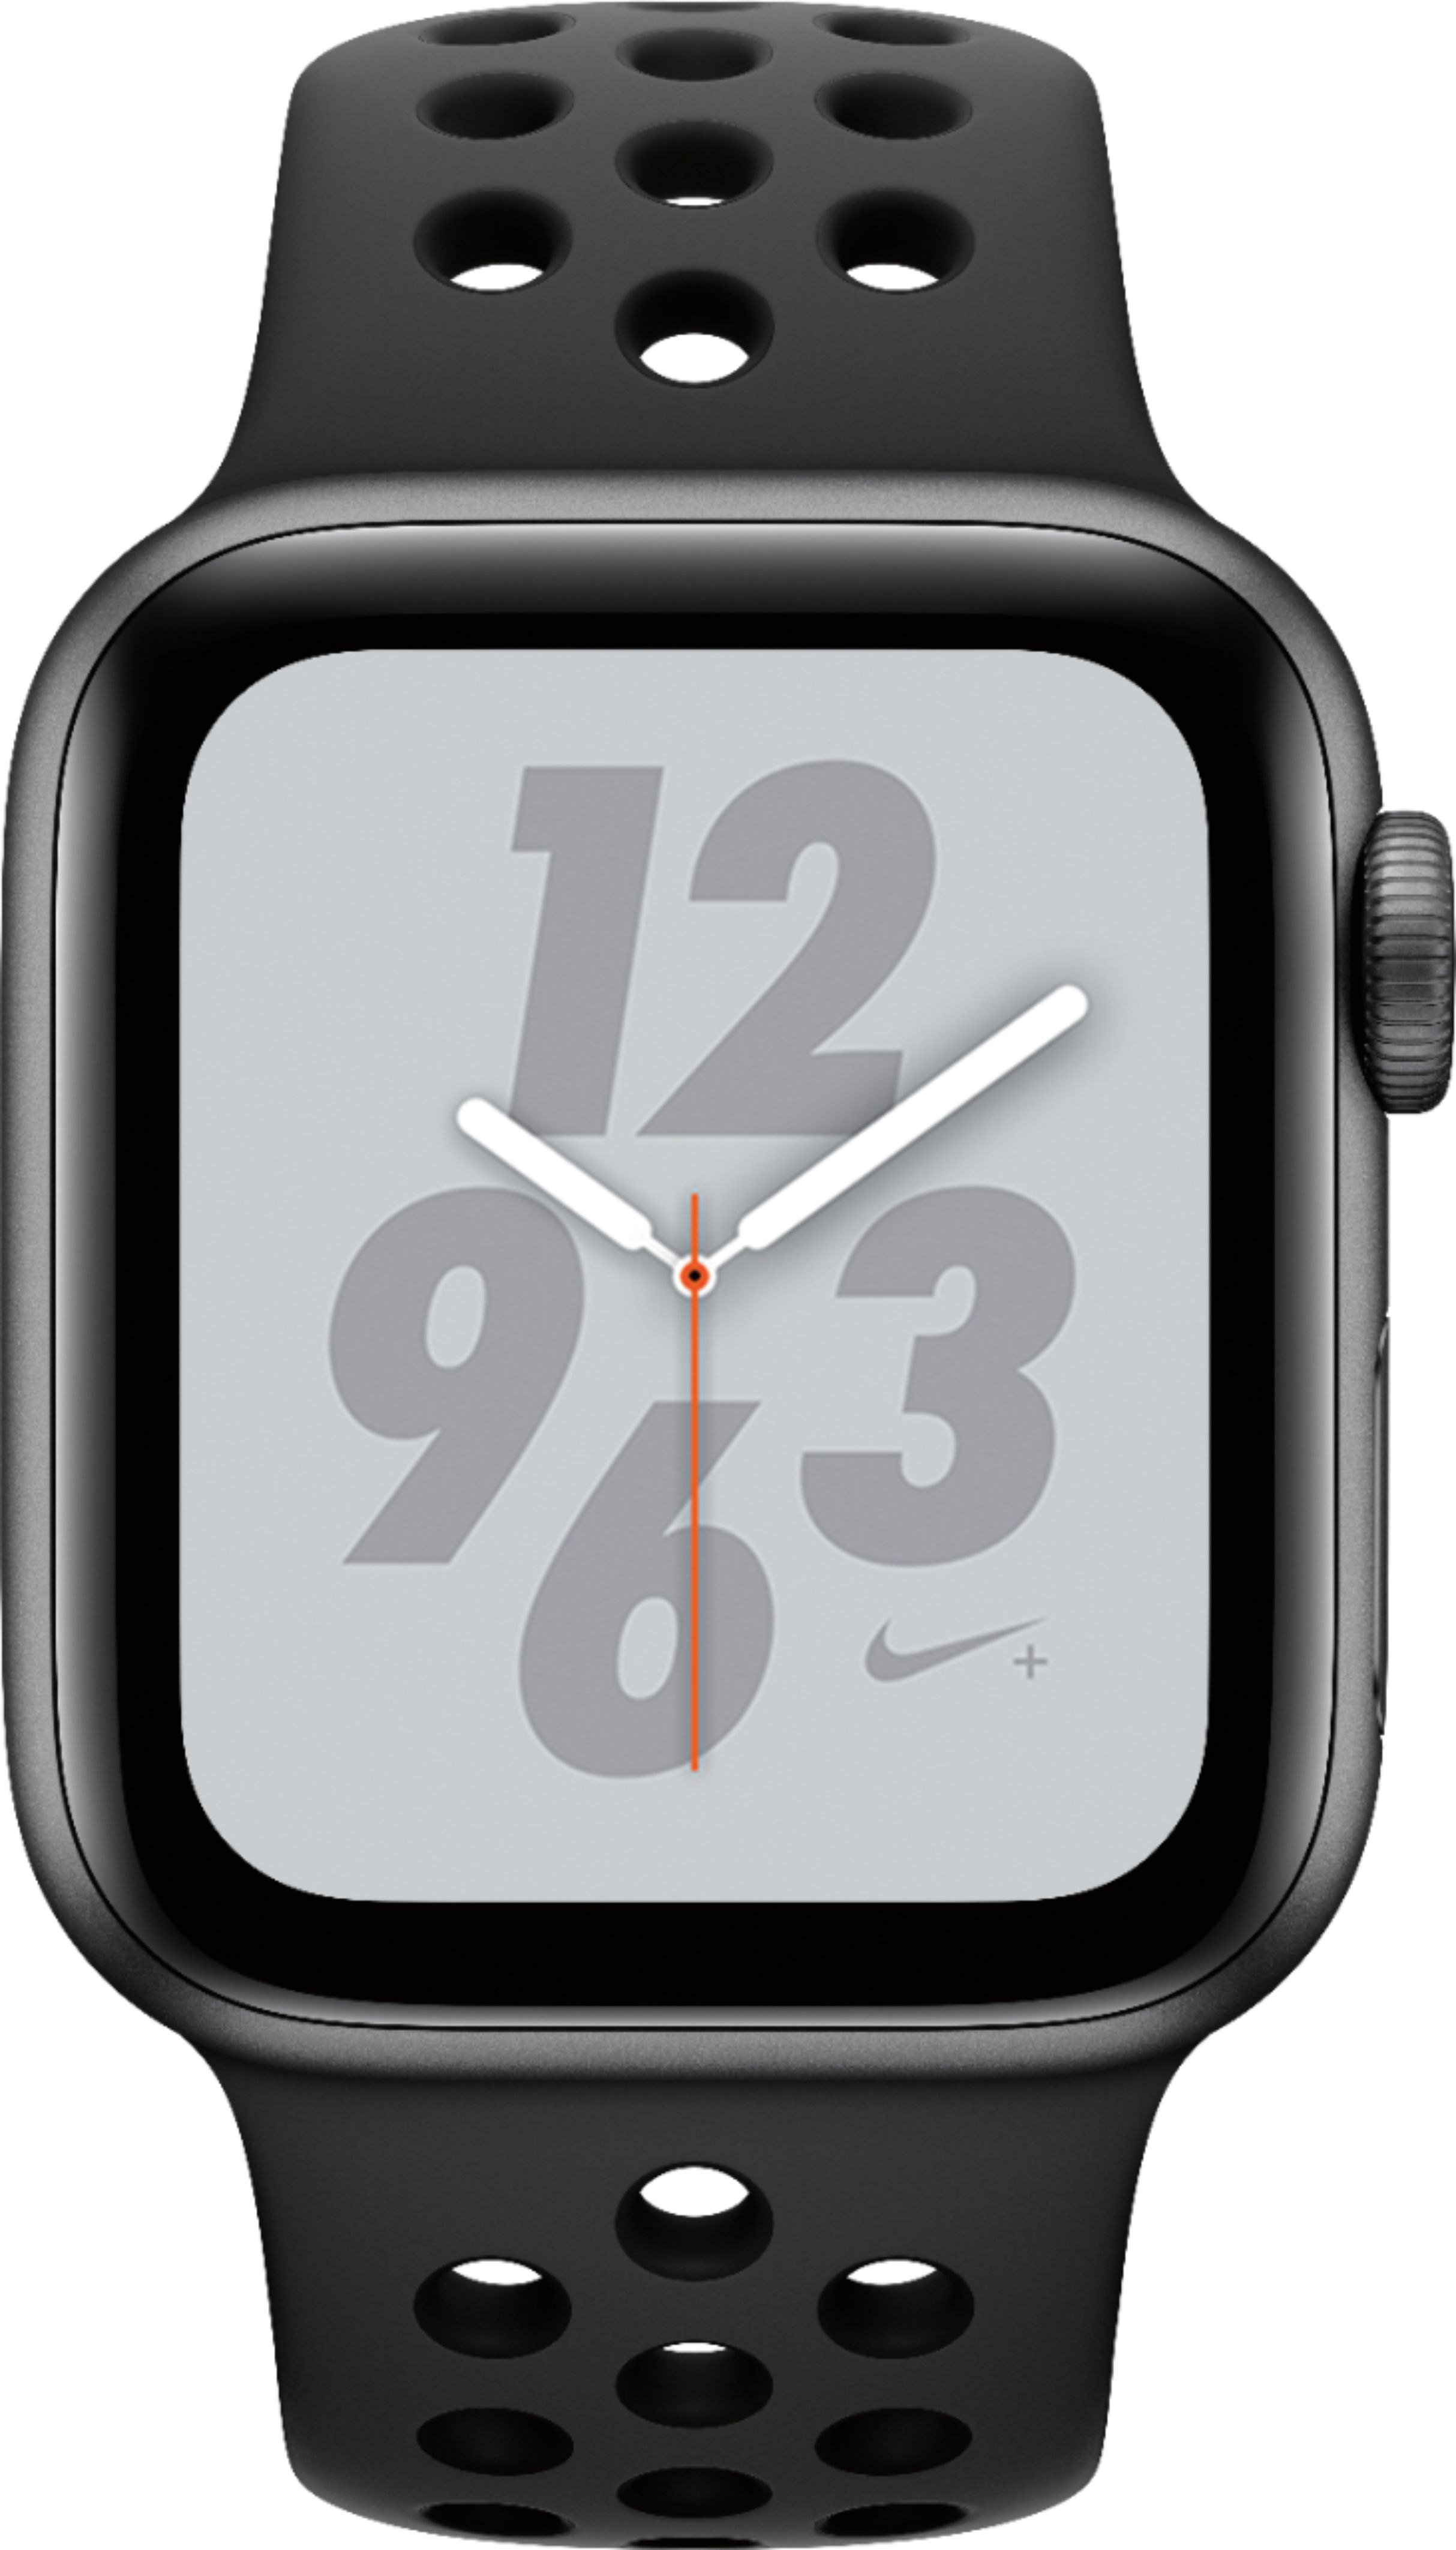 Geek Squad Certified Refurbished Apple Watch Nike+ Series 4 (GPS) 40mm Aluminum Case Nike Sport Band Space Gray Aluminum GSRF-MU6J2LL/A Buy